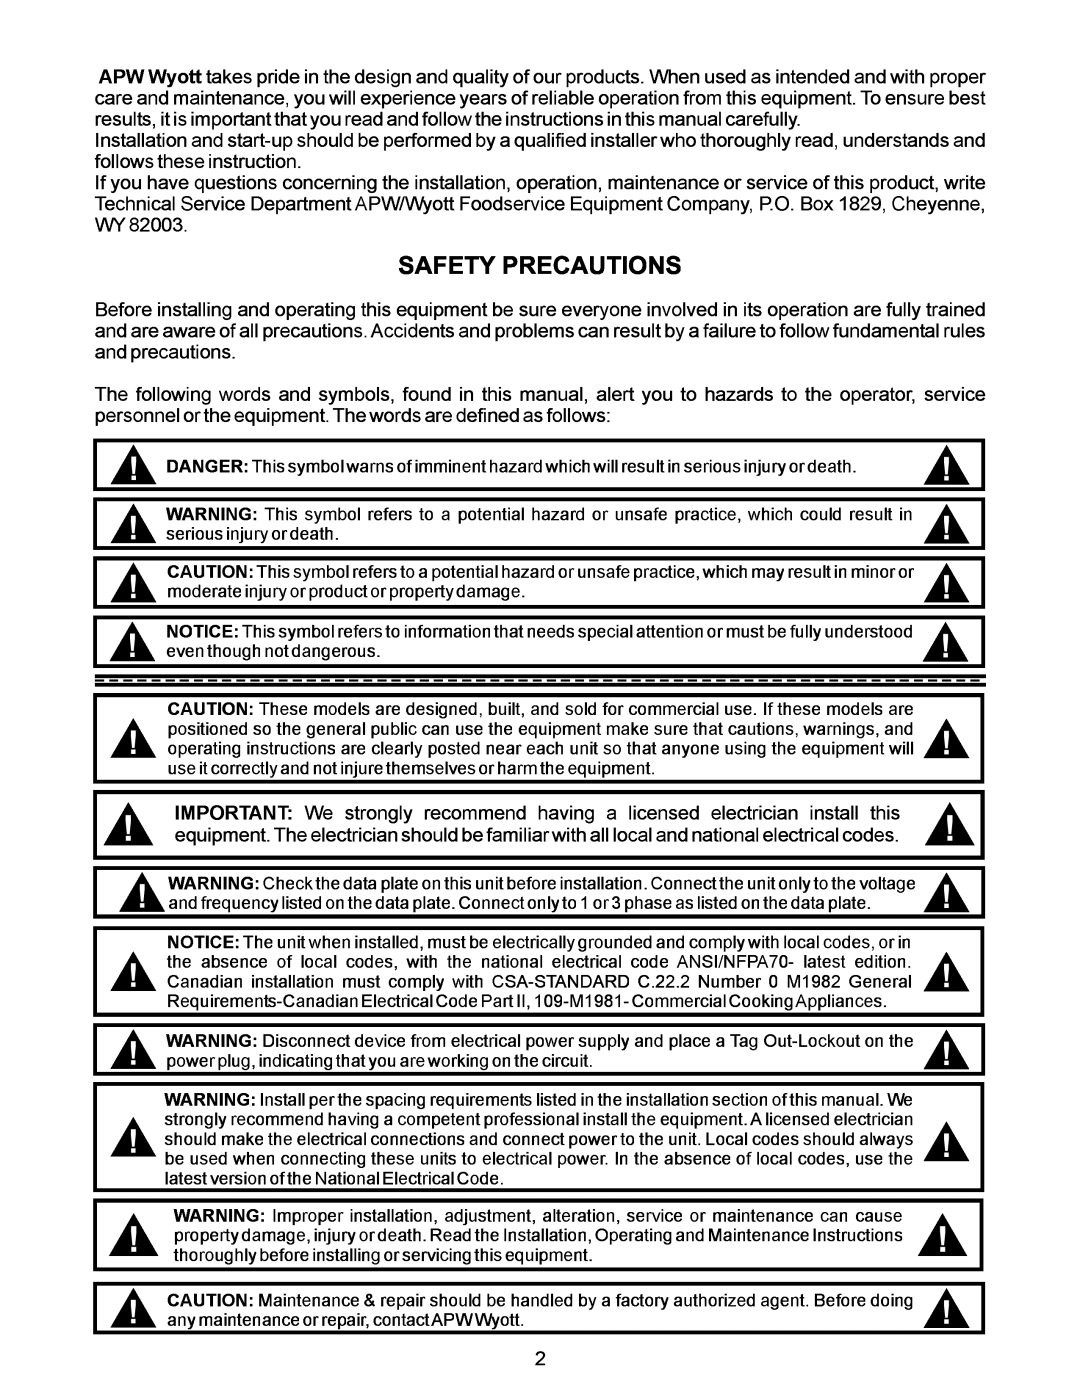 APW Wyott CCW MK VII, RCCW MK VII, LCCW MK VII, RLCCW MK VII manual Safety Precautions 